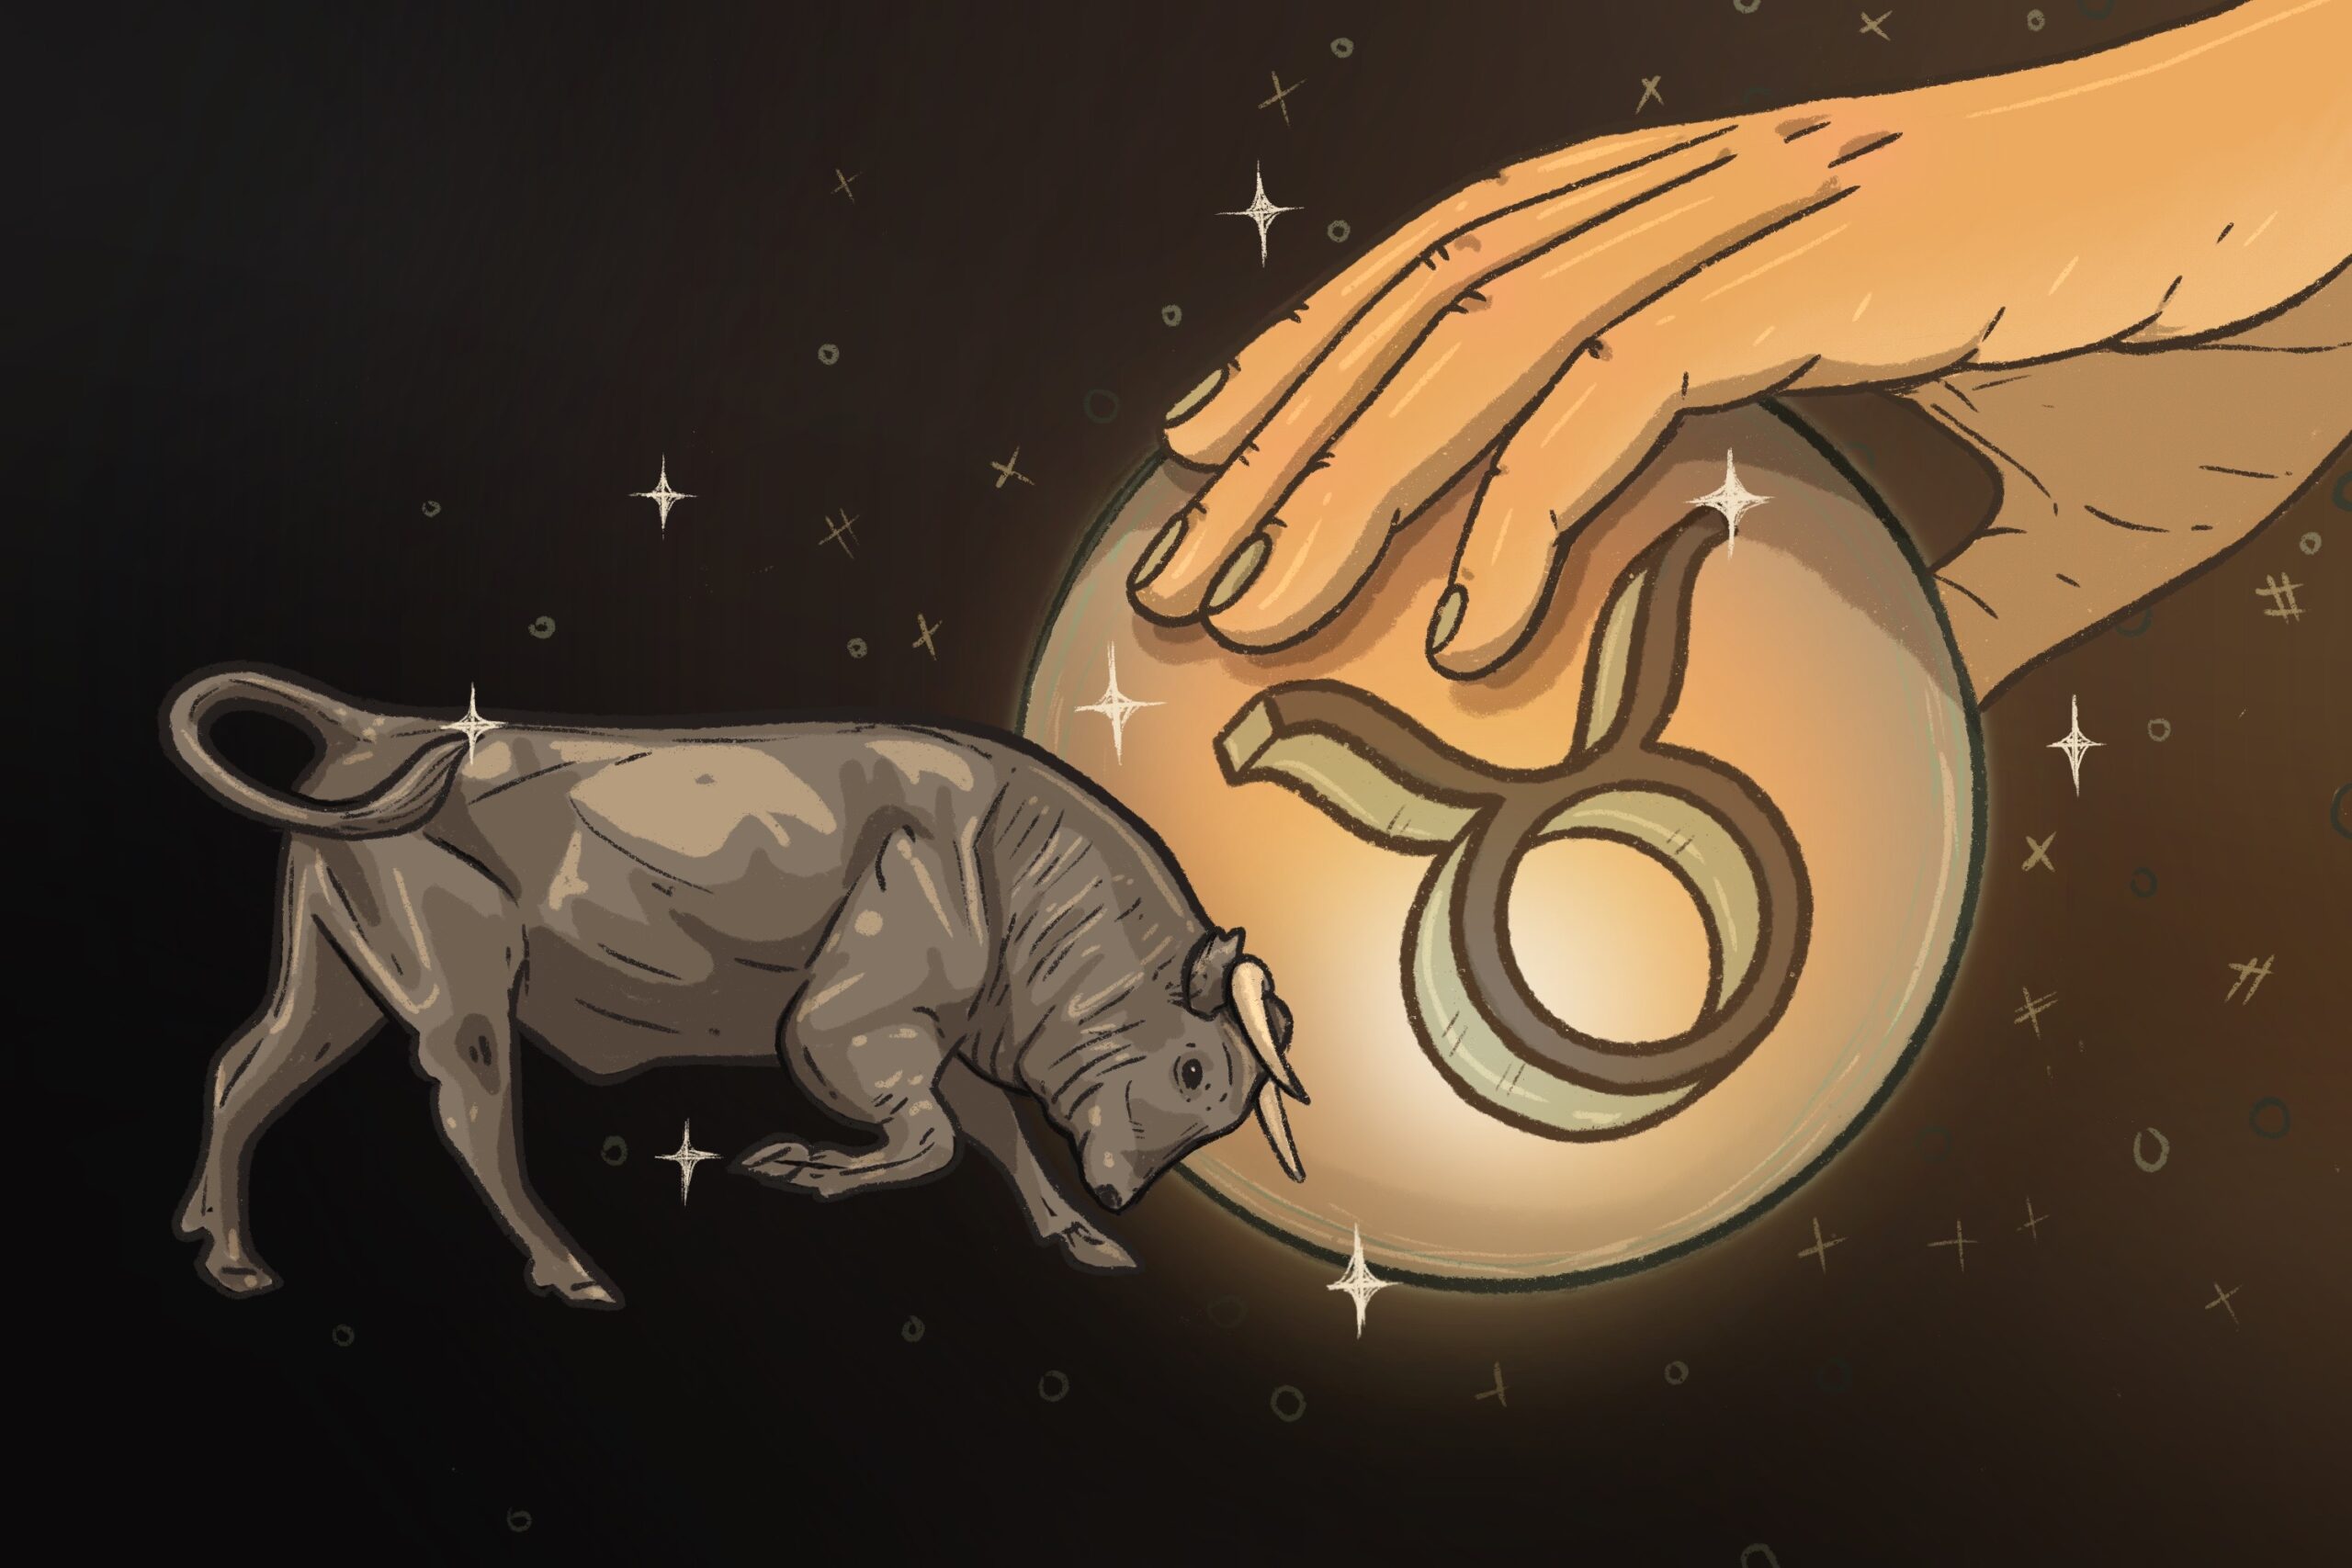 gal-dem horoscopes: Taurus season is bittersweet